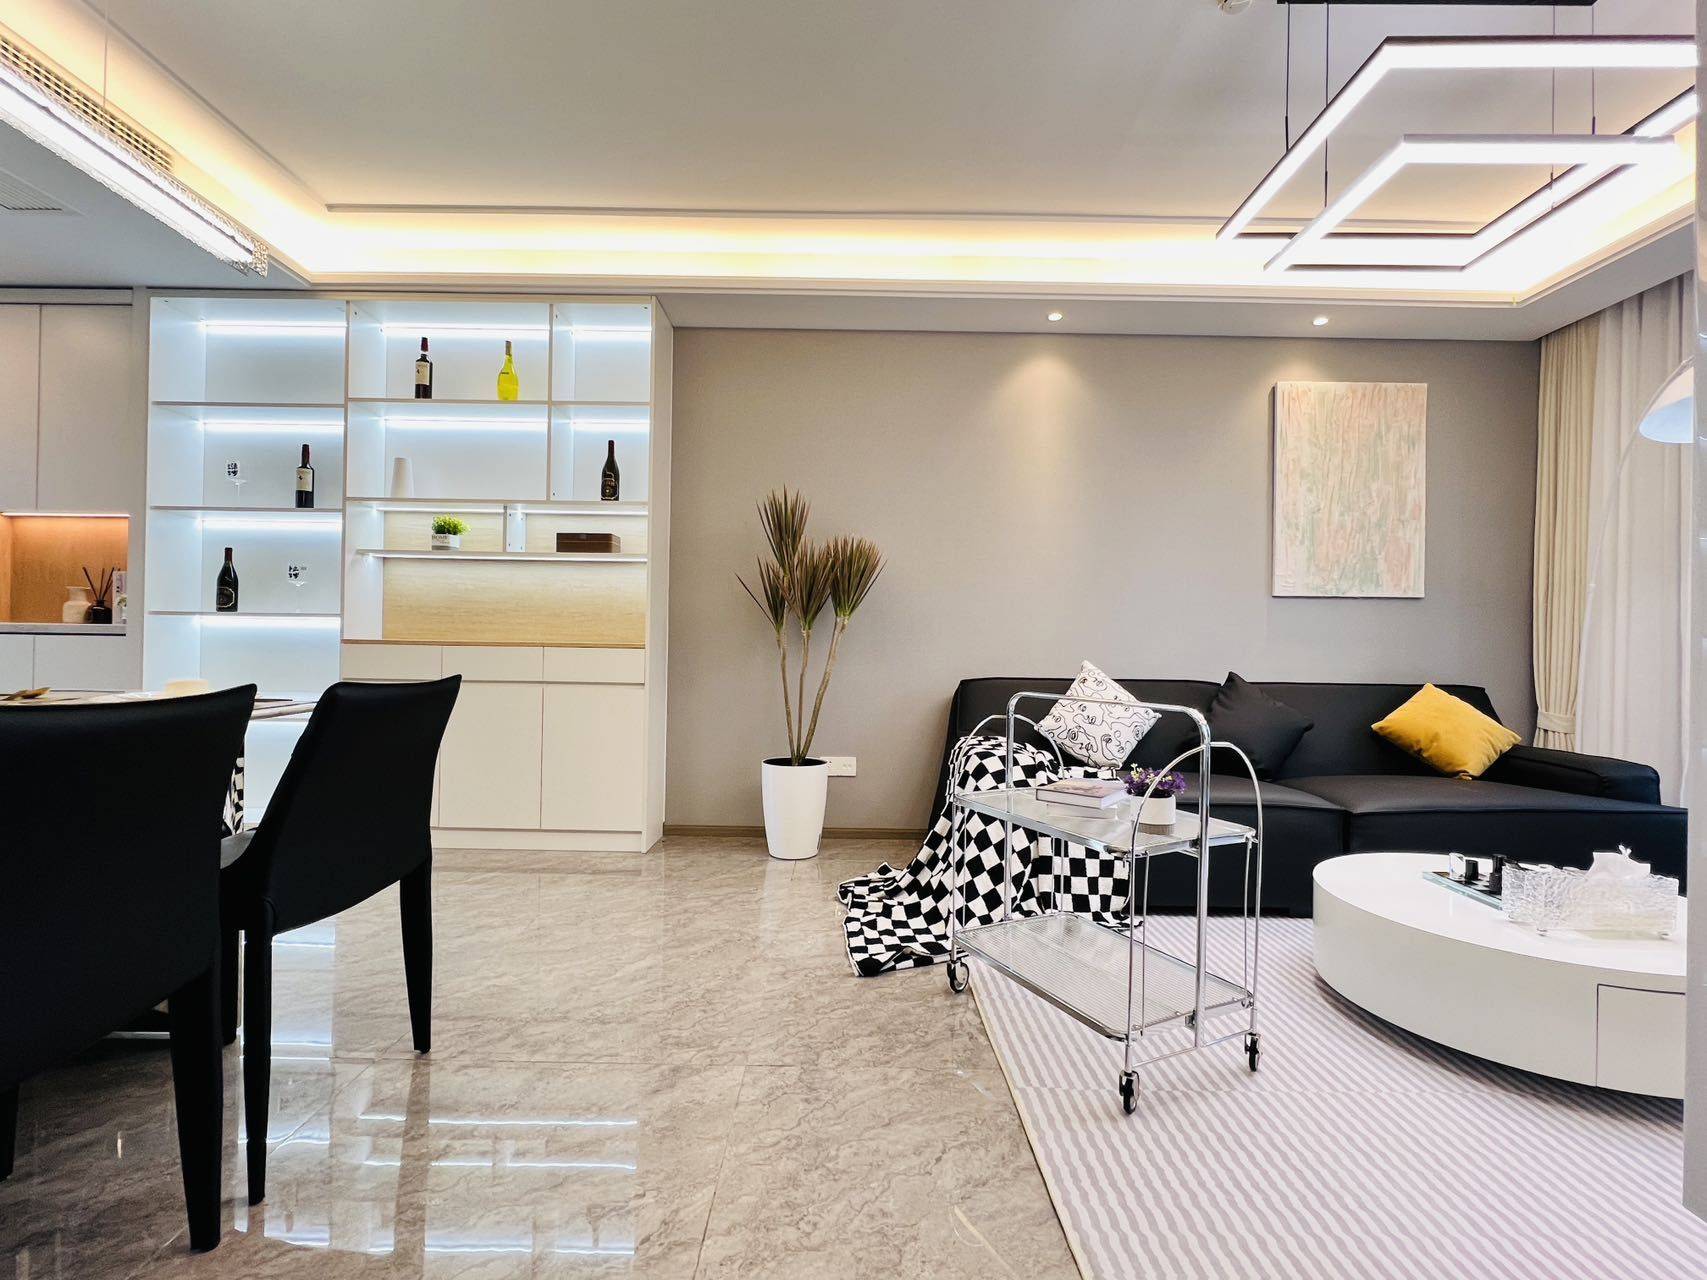 Hangzhou-Xiaoshan-Cozy Home,Clean&Comfy,No Gender Limit,Chilled